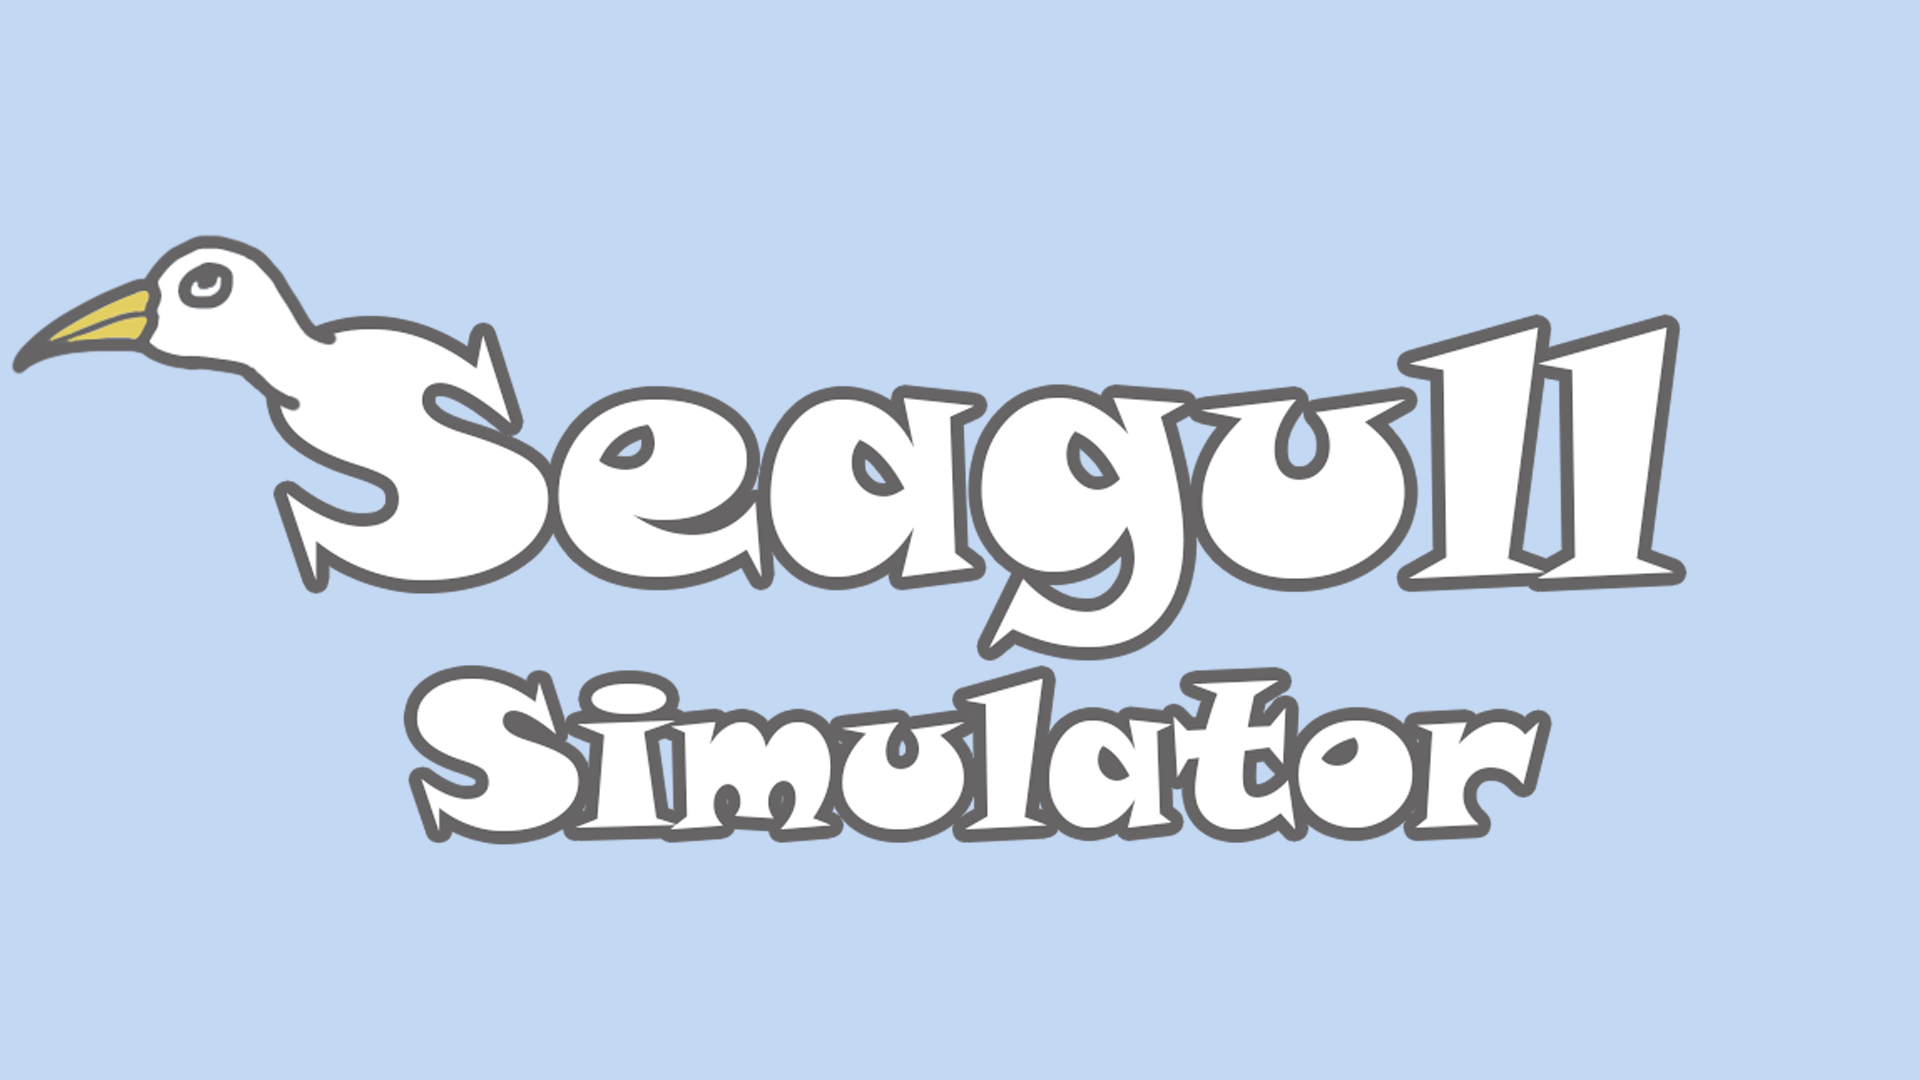 Seagull Simulator